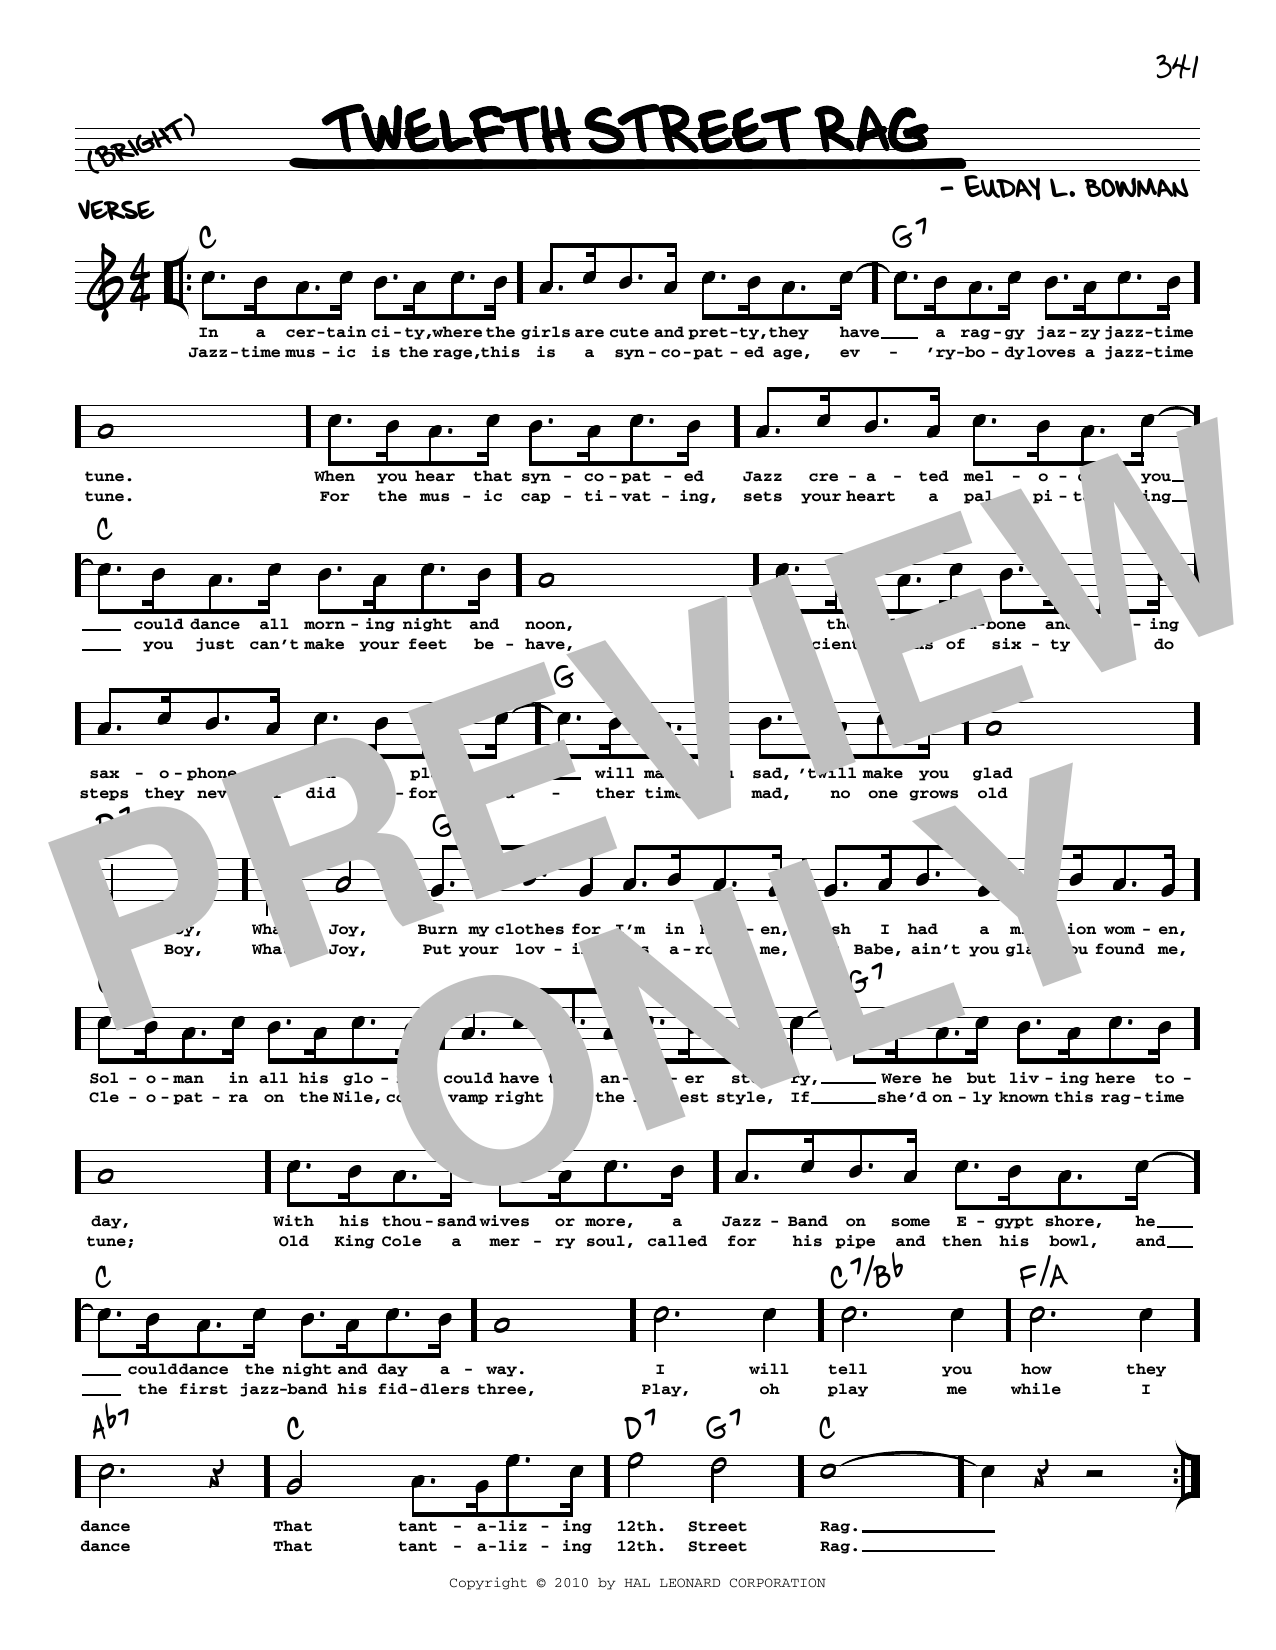 Euday L. Bowman Twelfth Street Rag (arr. Robert Rawlins) Sheet Music Notes & Chords for Real Book – Melody, Lyrics & Chords - Download or Print PDF